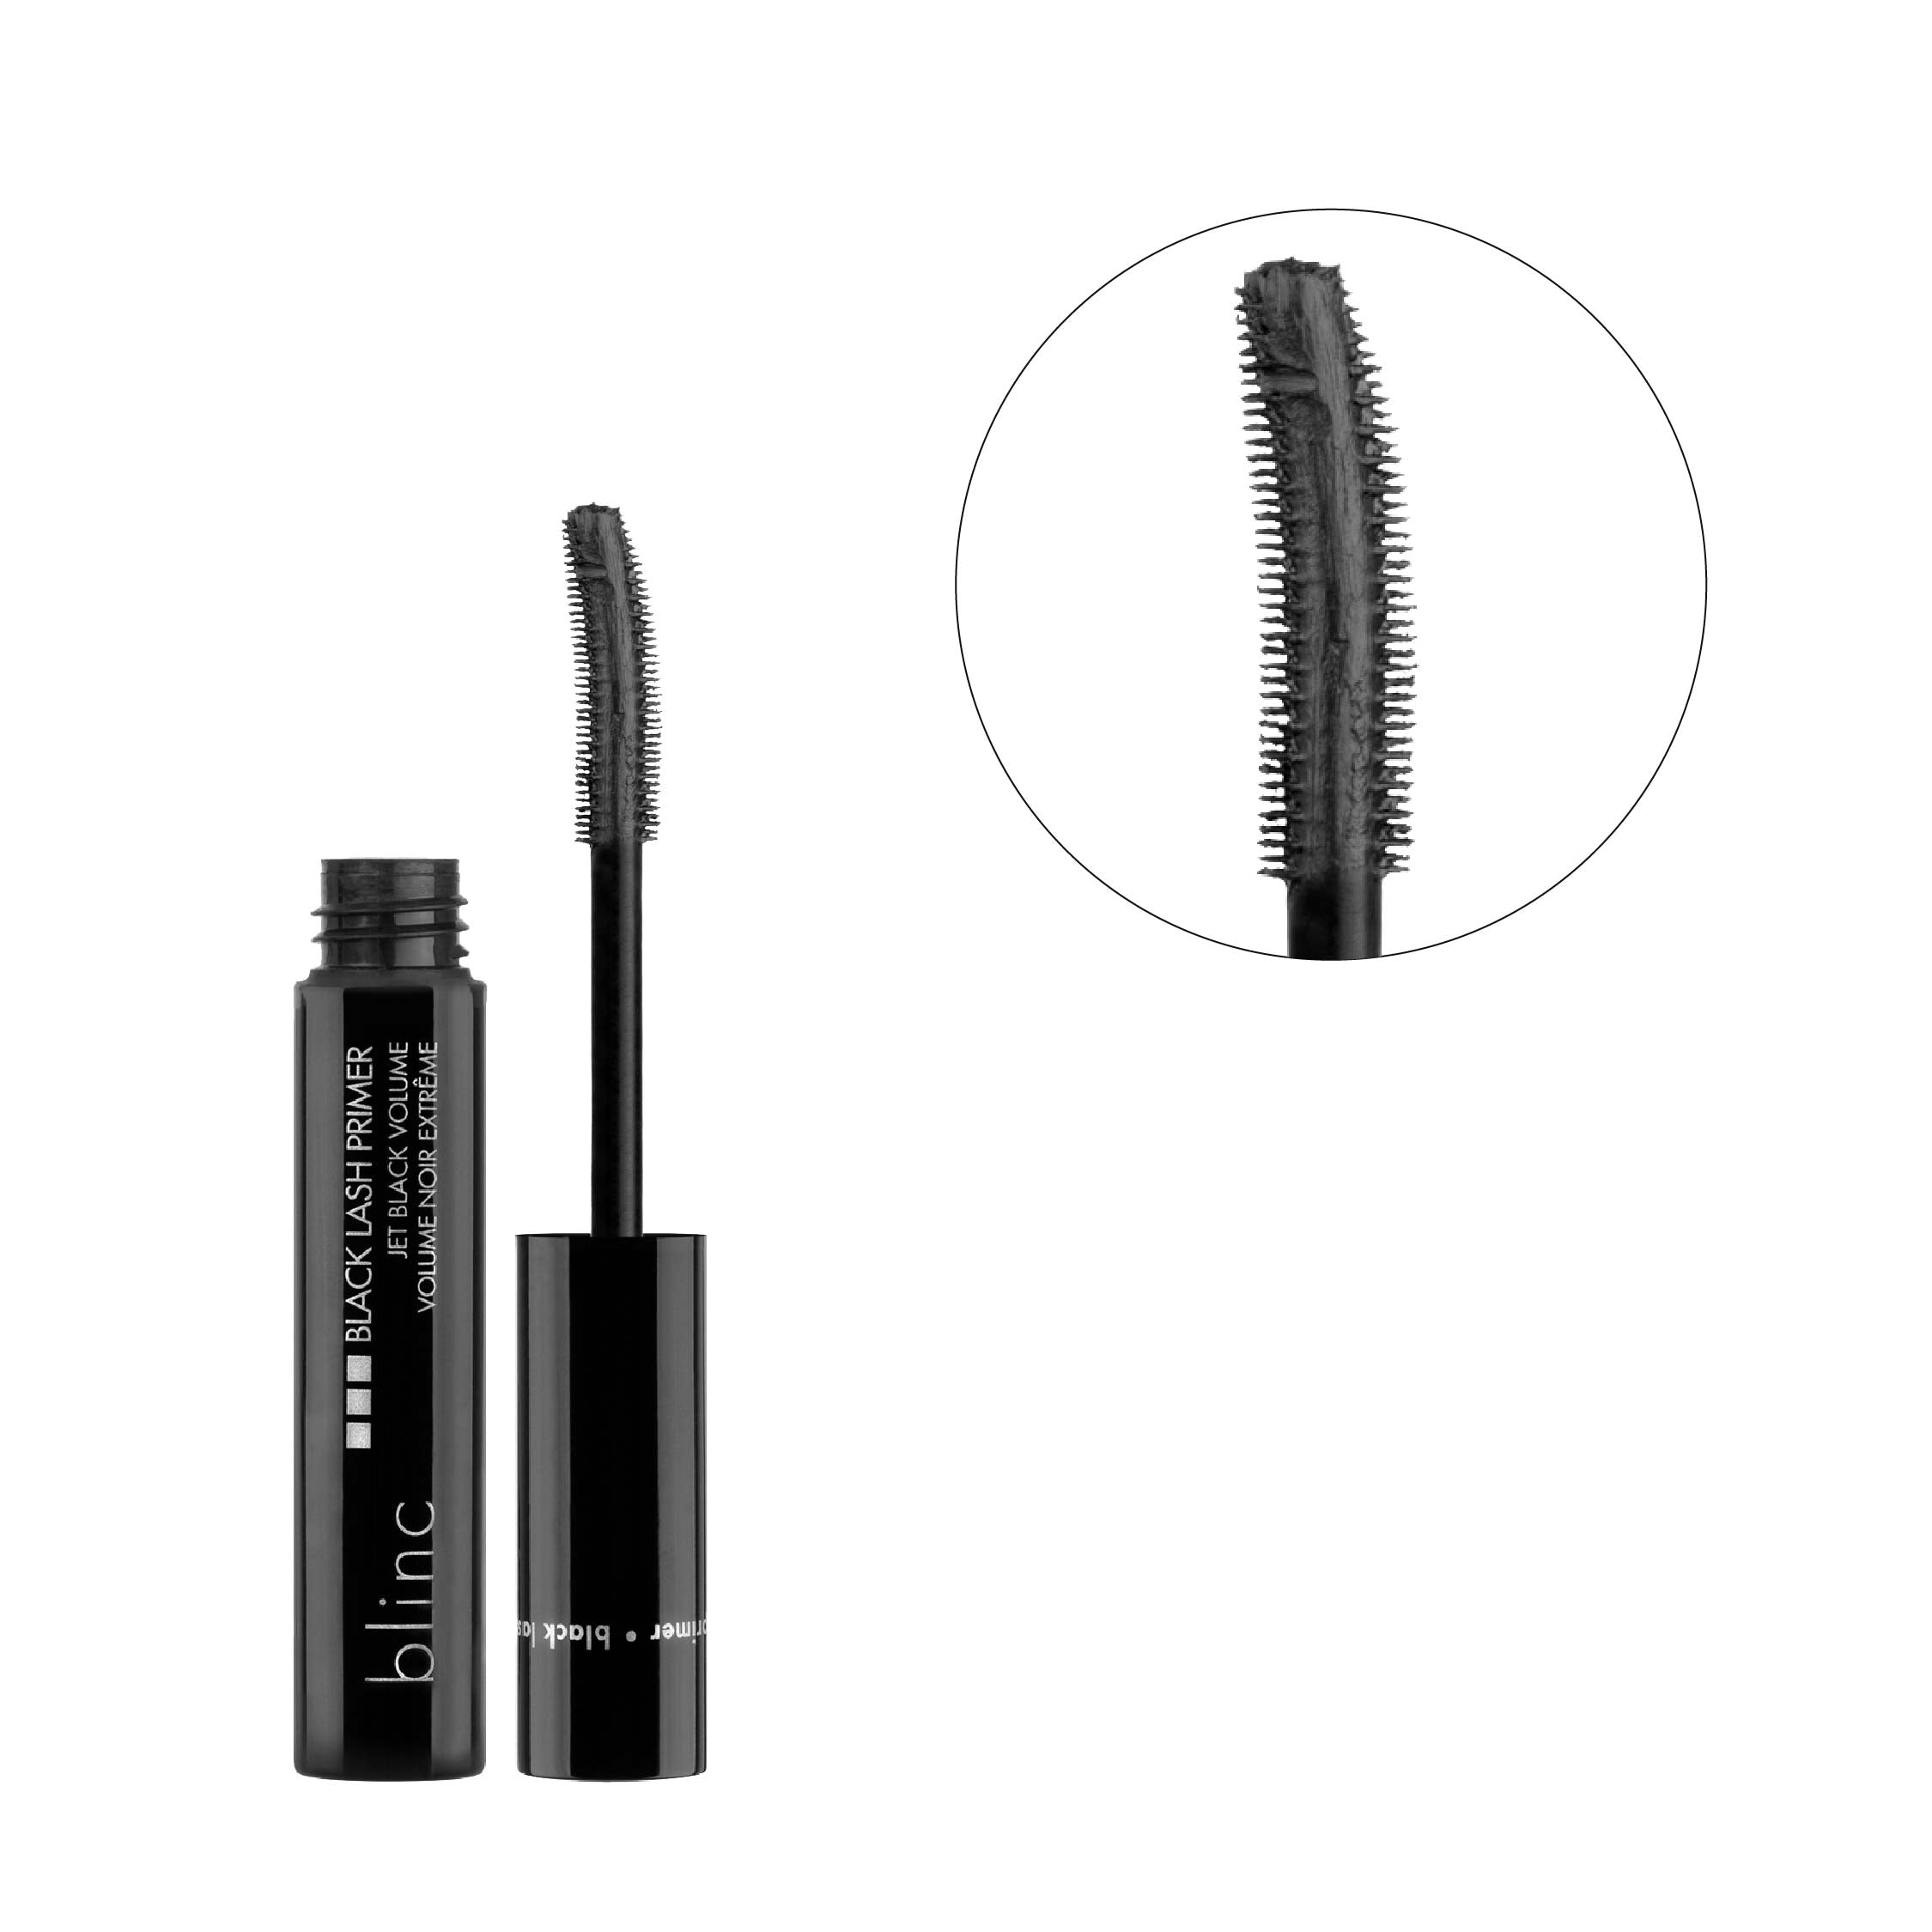 Black Lash Primer - Eyelash primer fullness & thickness | Cosmetics